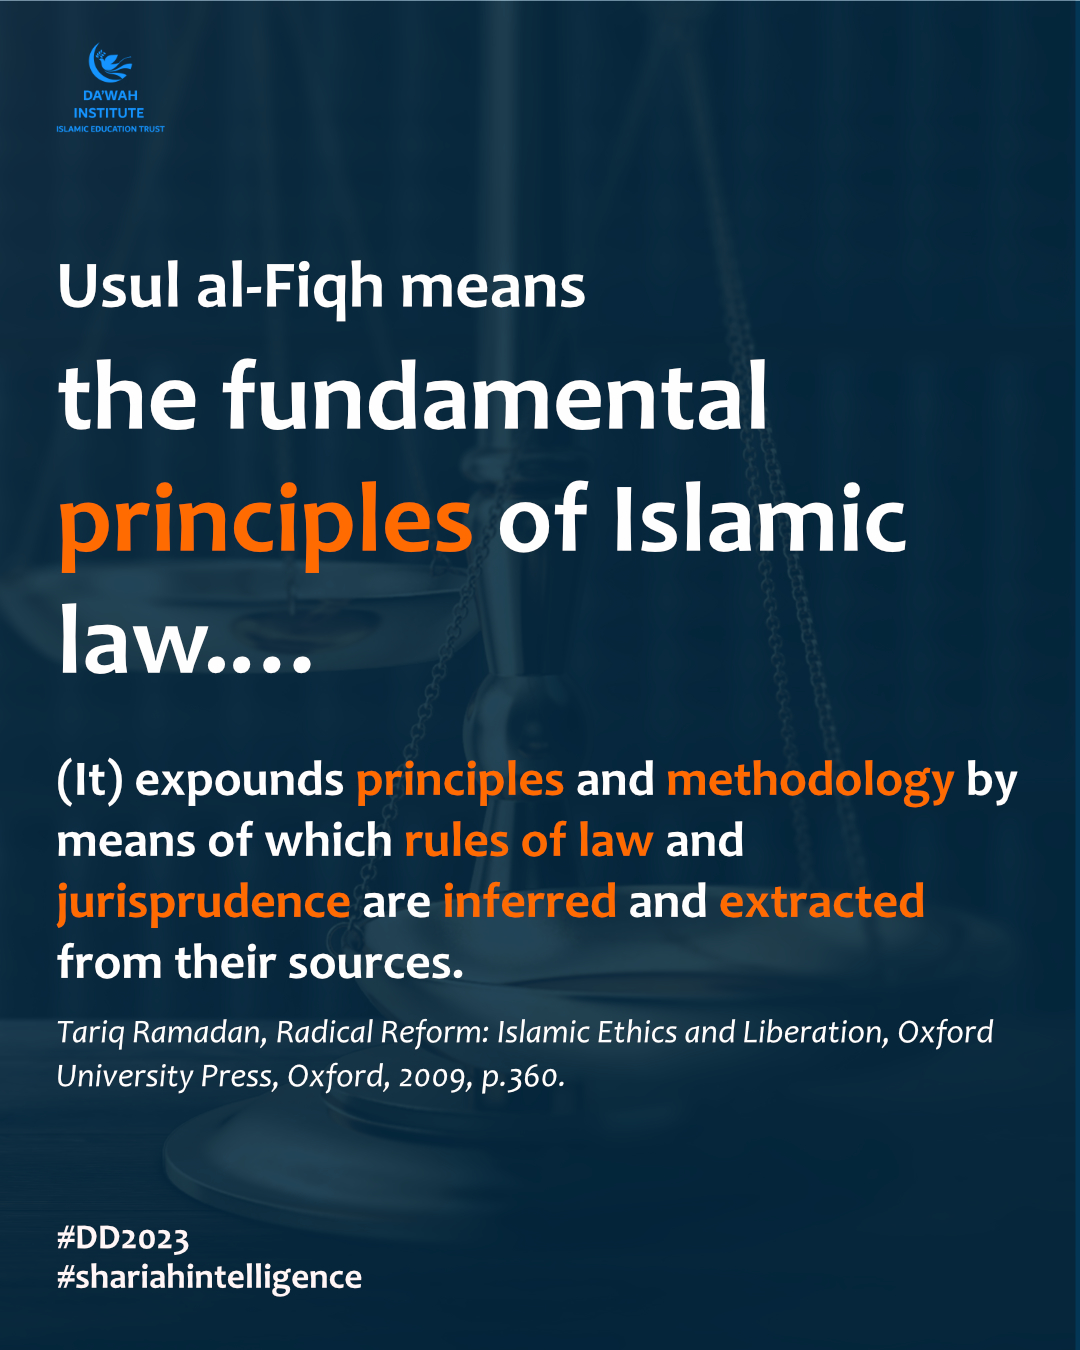 The fundamental principles of Islamic law